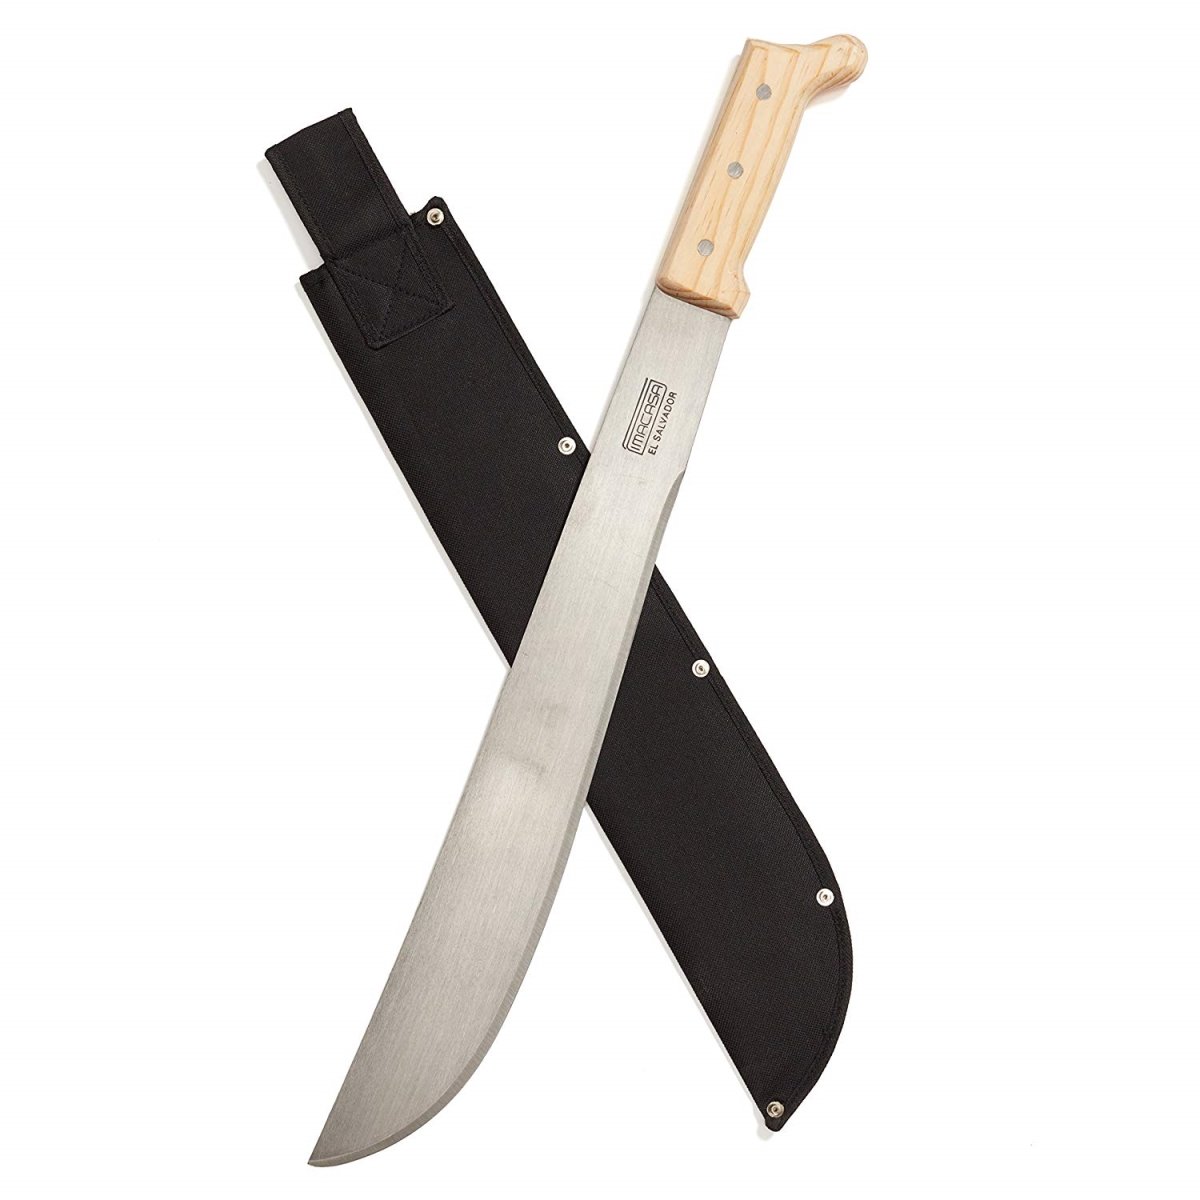 Ima-127-12p-mi 2019 12 In. Machete 127 Knife With High Carbon Steel Blade & Hardwood Handle